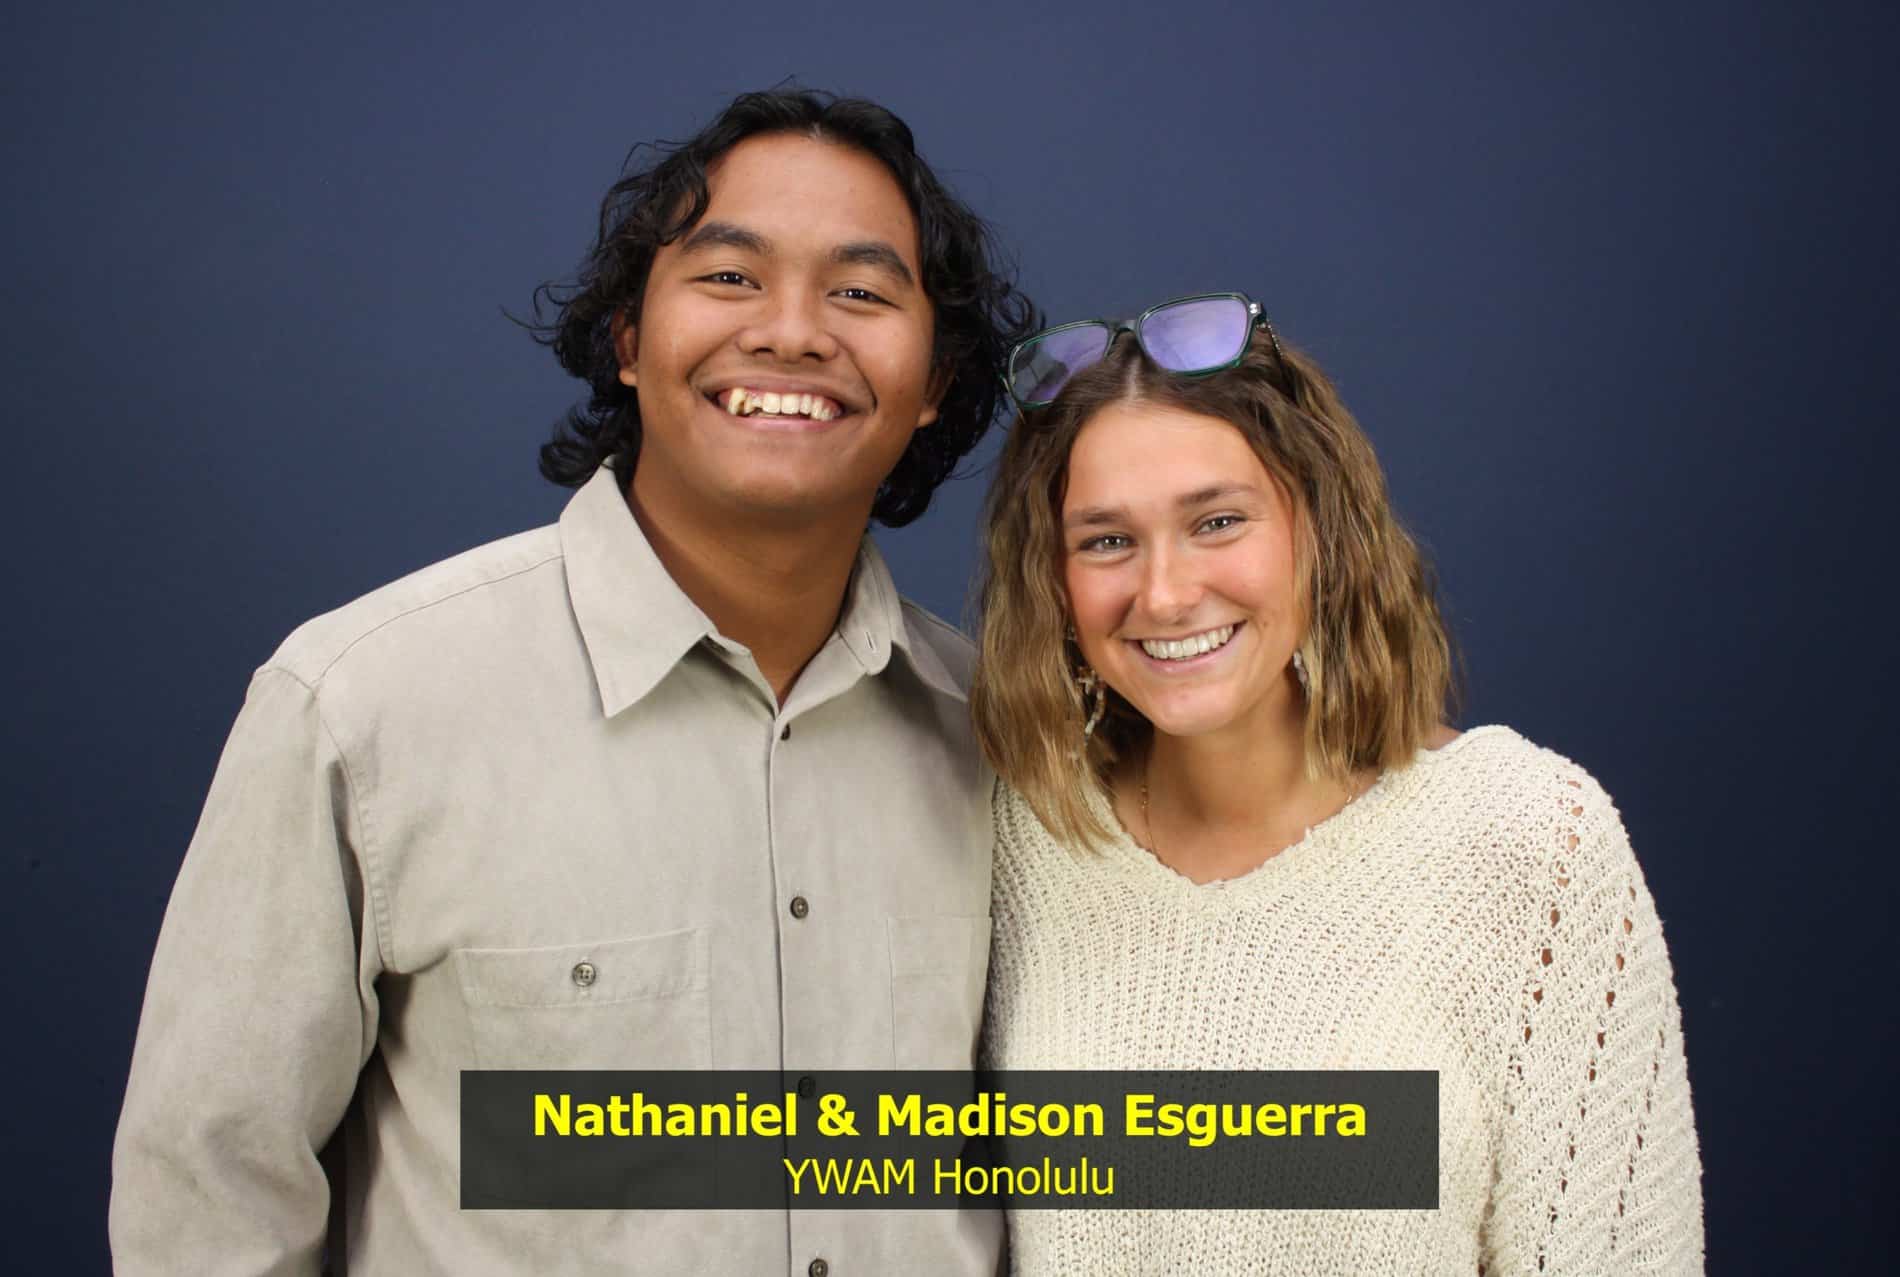 Nathaniel & Madison Esguerra